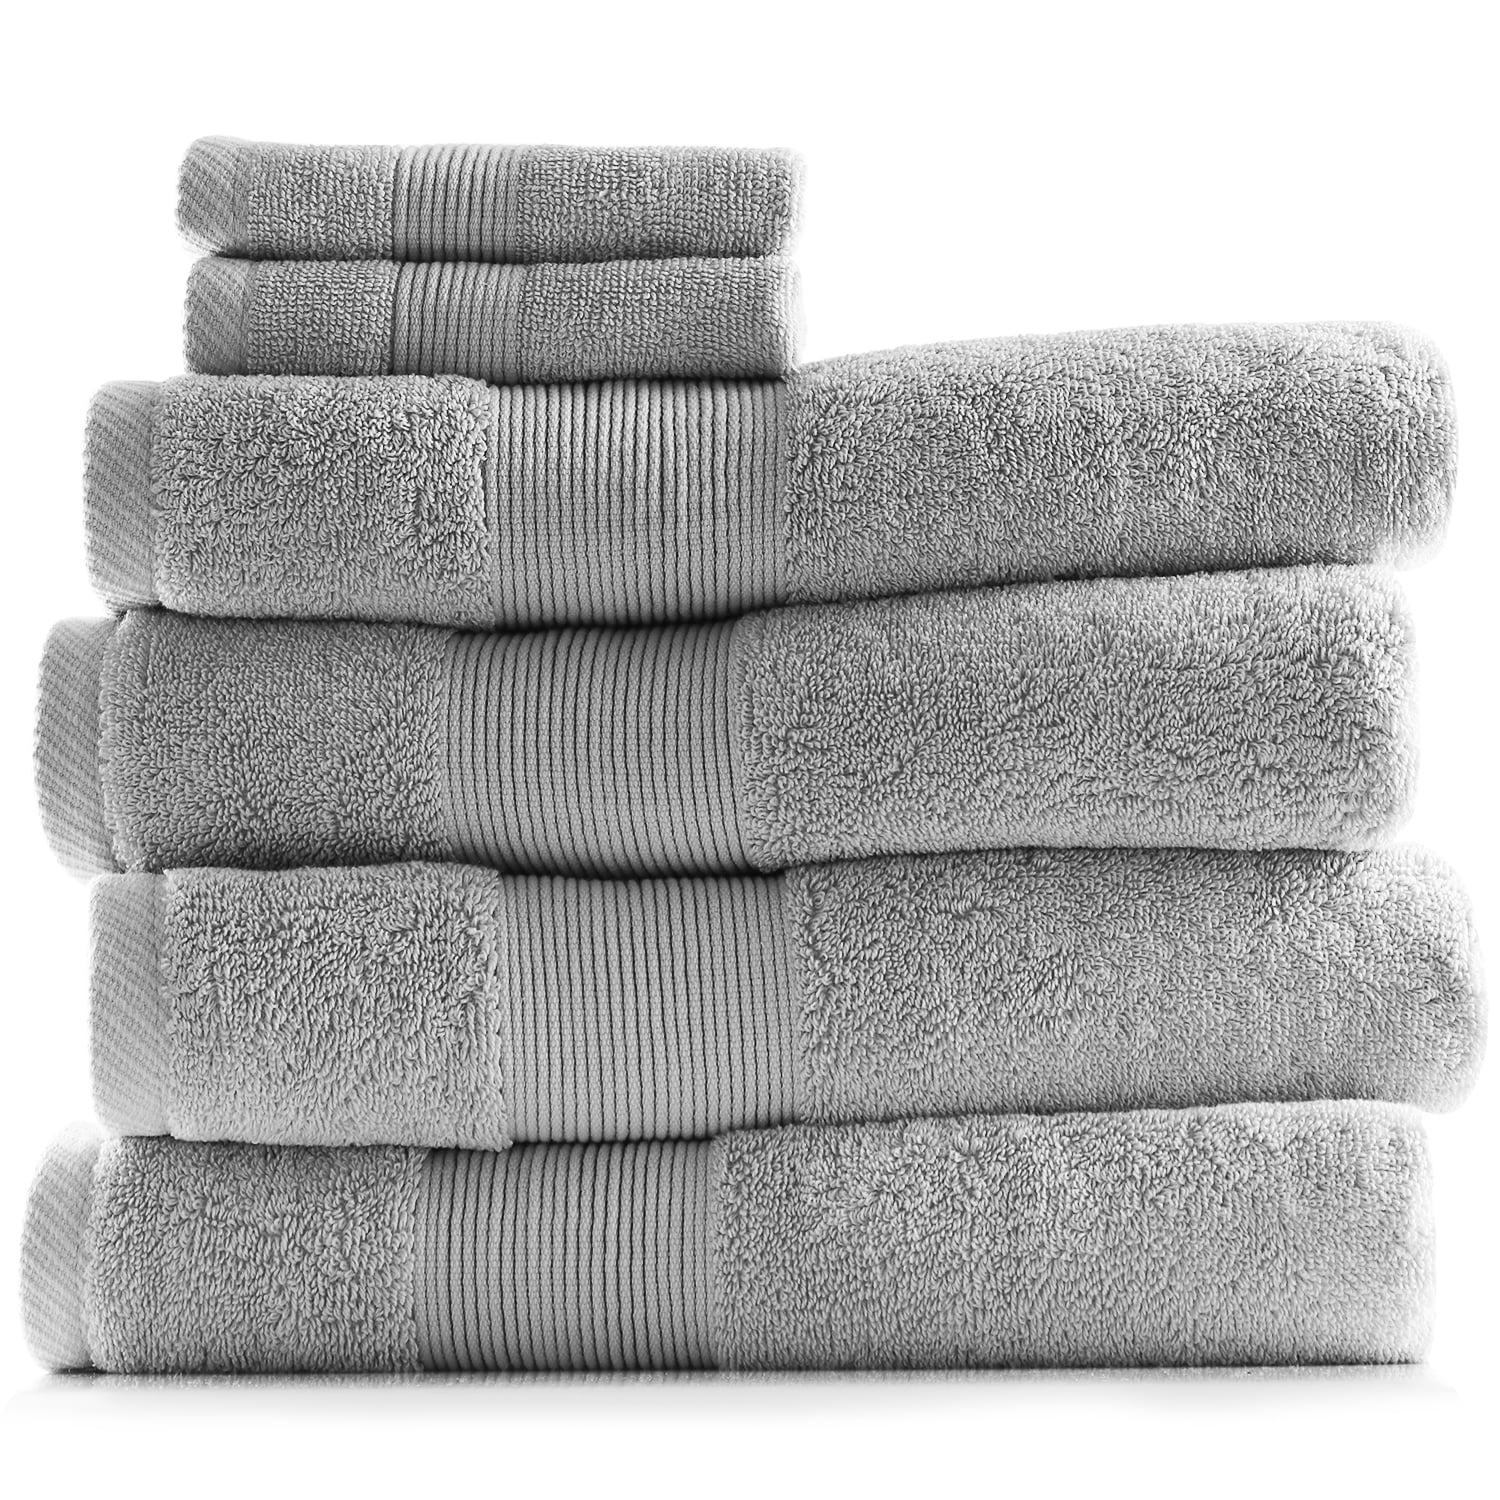 Towel Swimming Hand Spa solid Soft Set Cotton Face Pool Bathroom Bath Gift Beach 